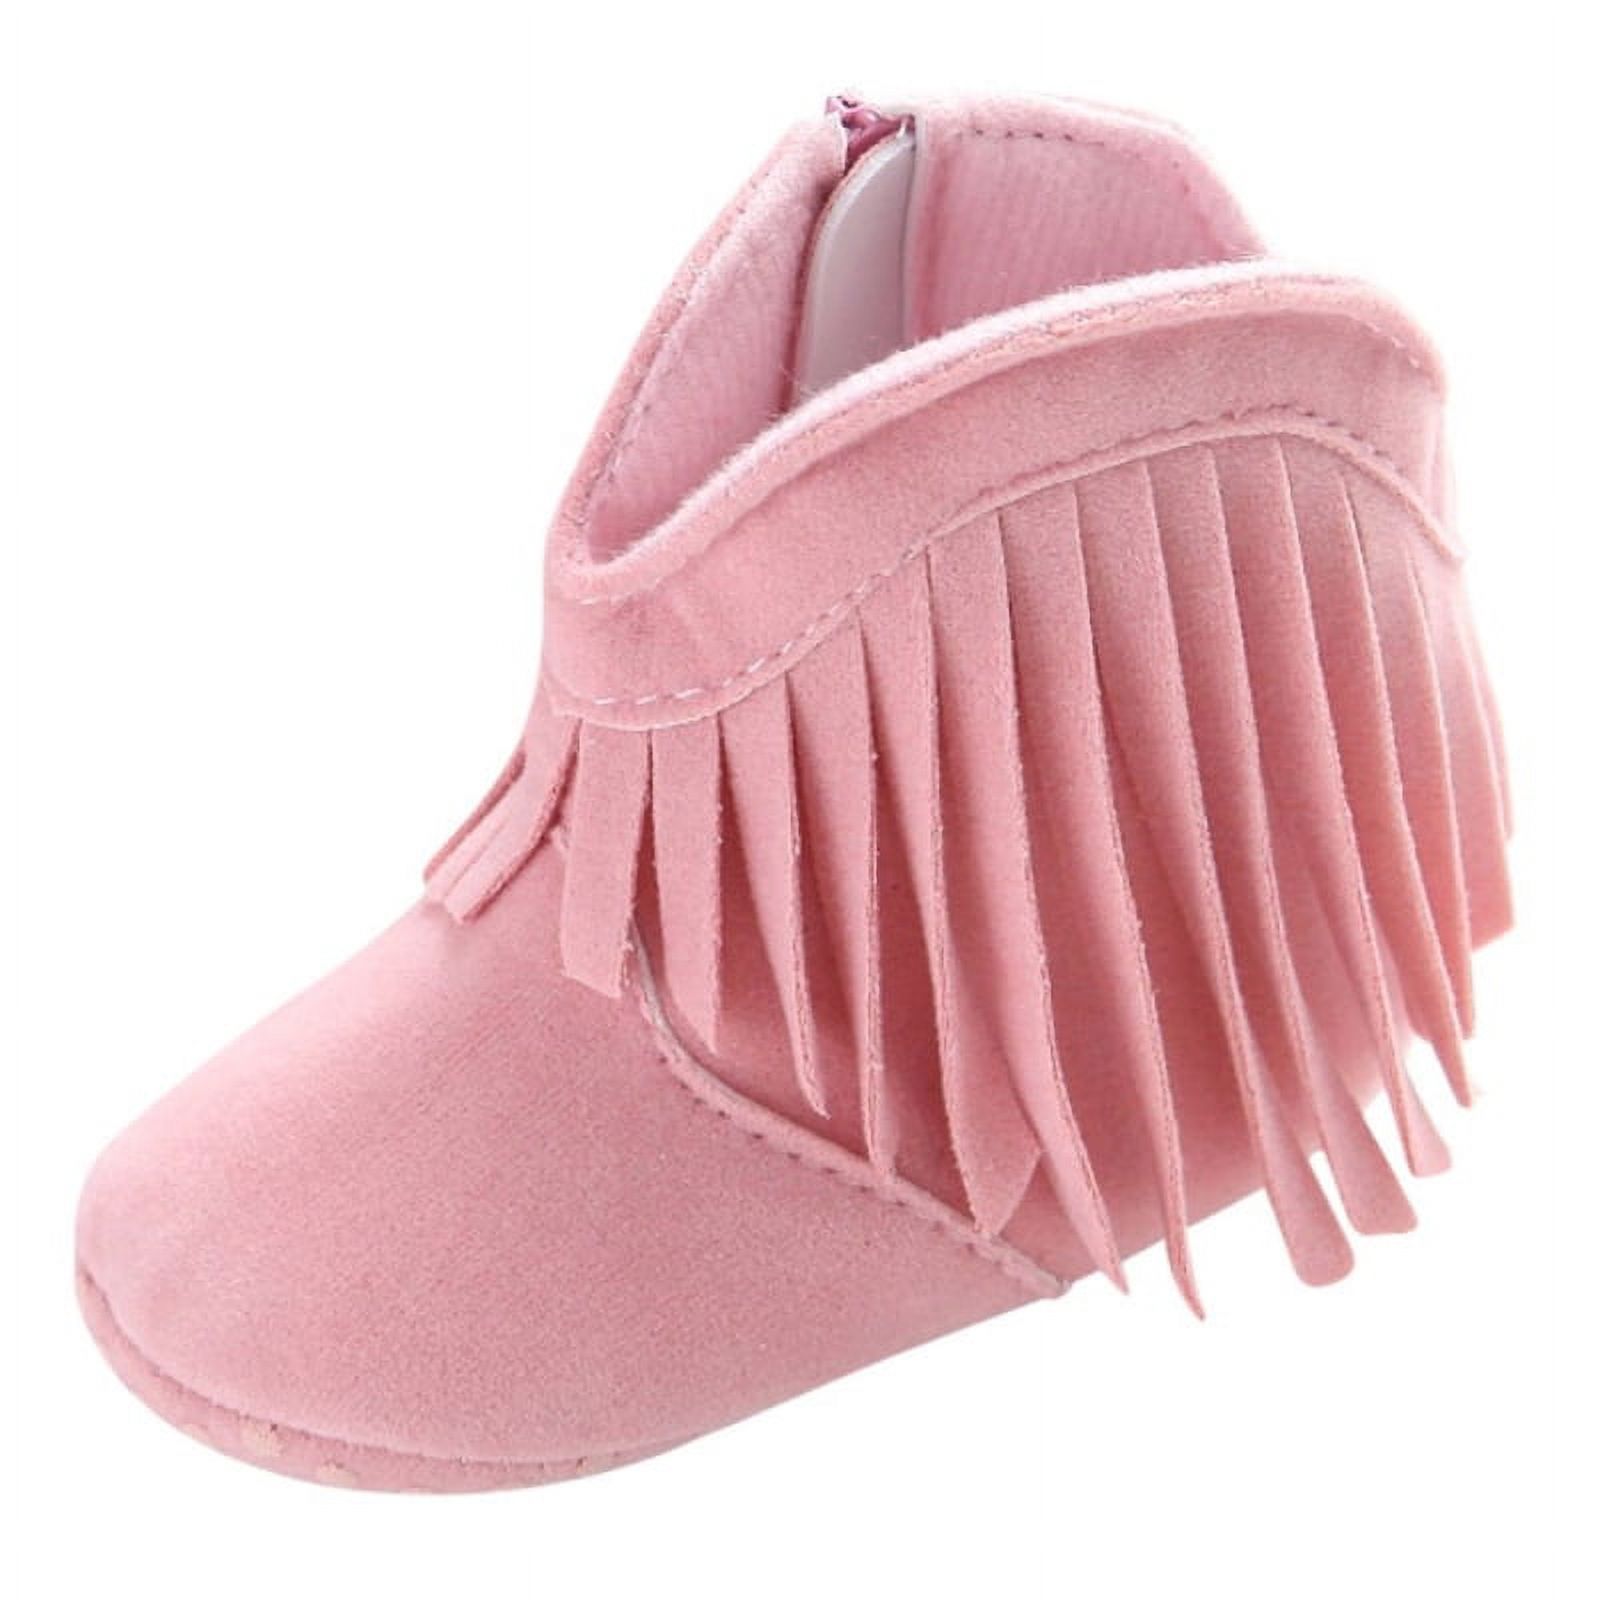 Finex Baby Boy Girl Tassel Boots Infant Toddler Soft Soled Winter Shoes - image 5 of 5